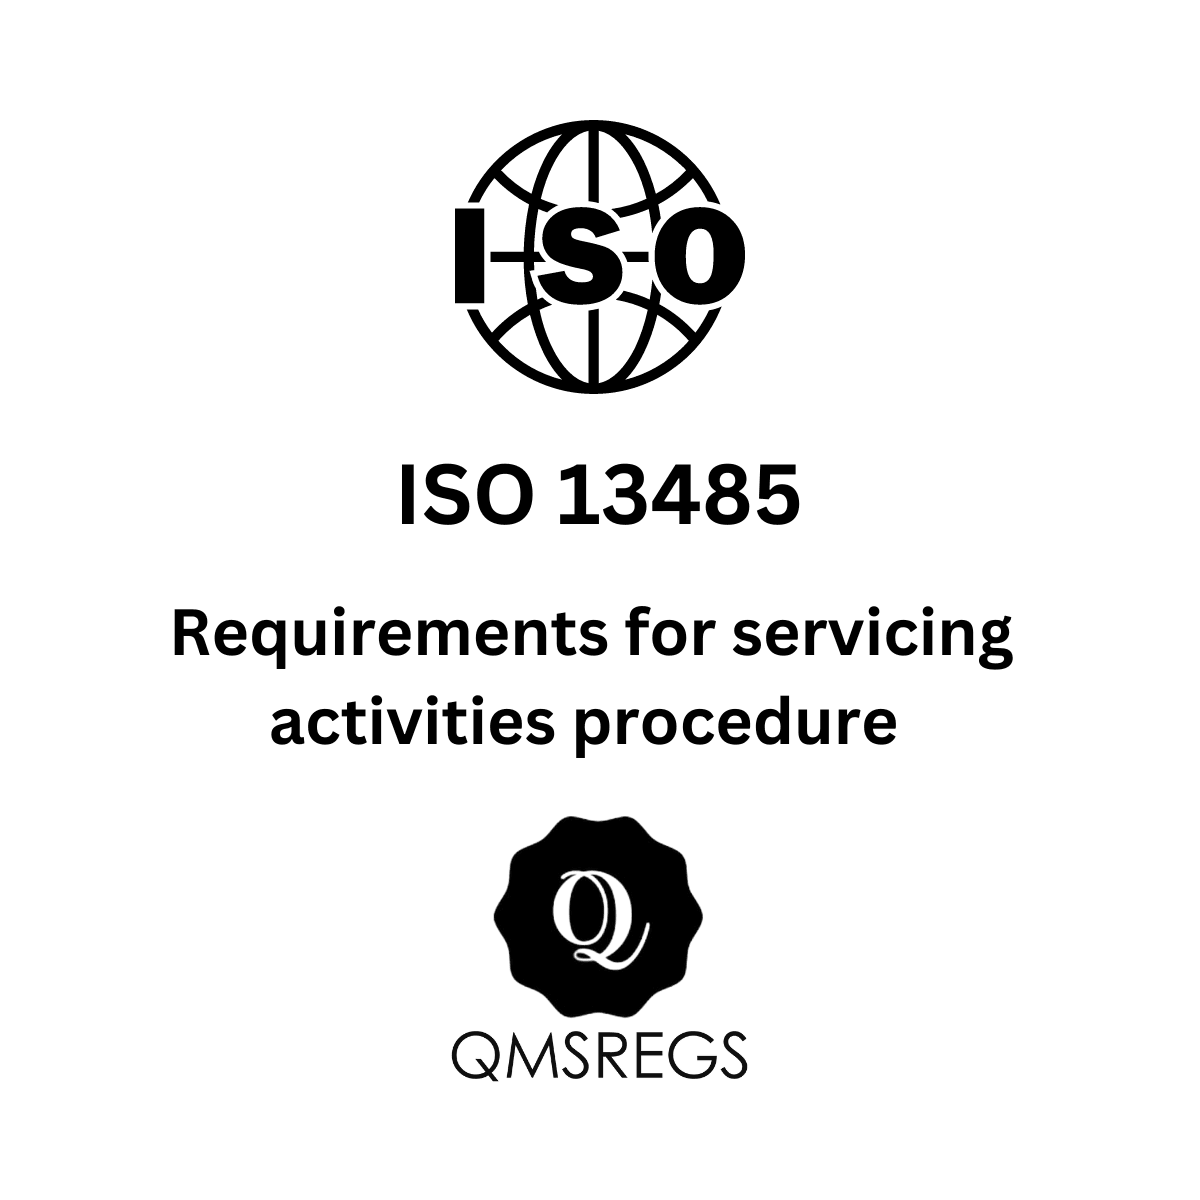 ISO 13485 requirements for servicing activities procedure template